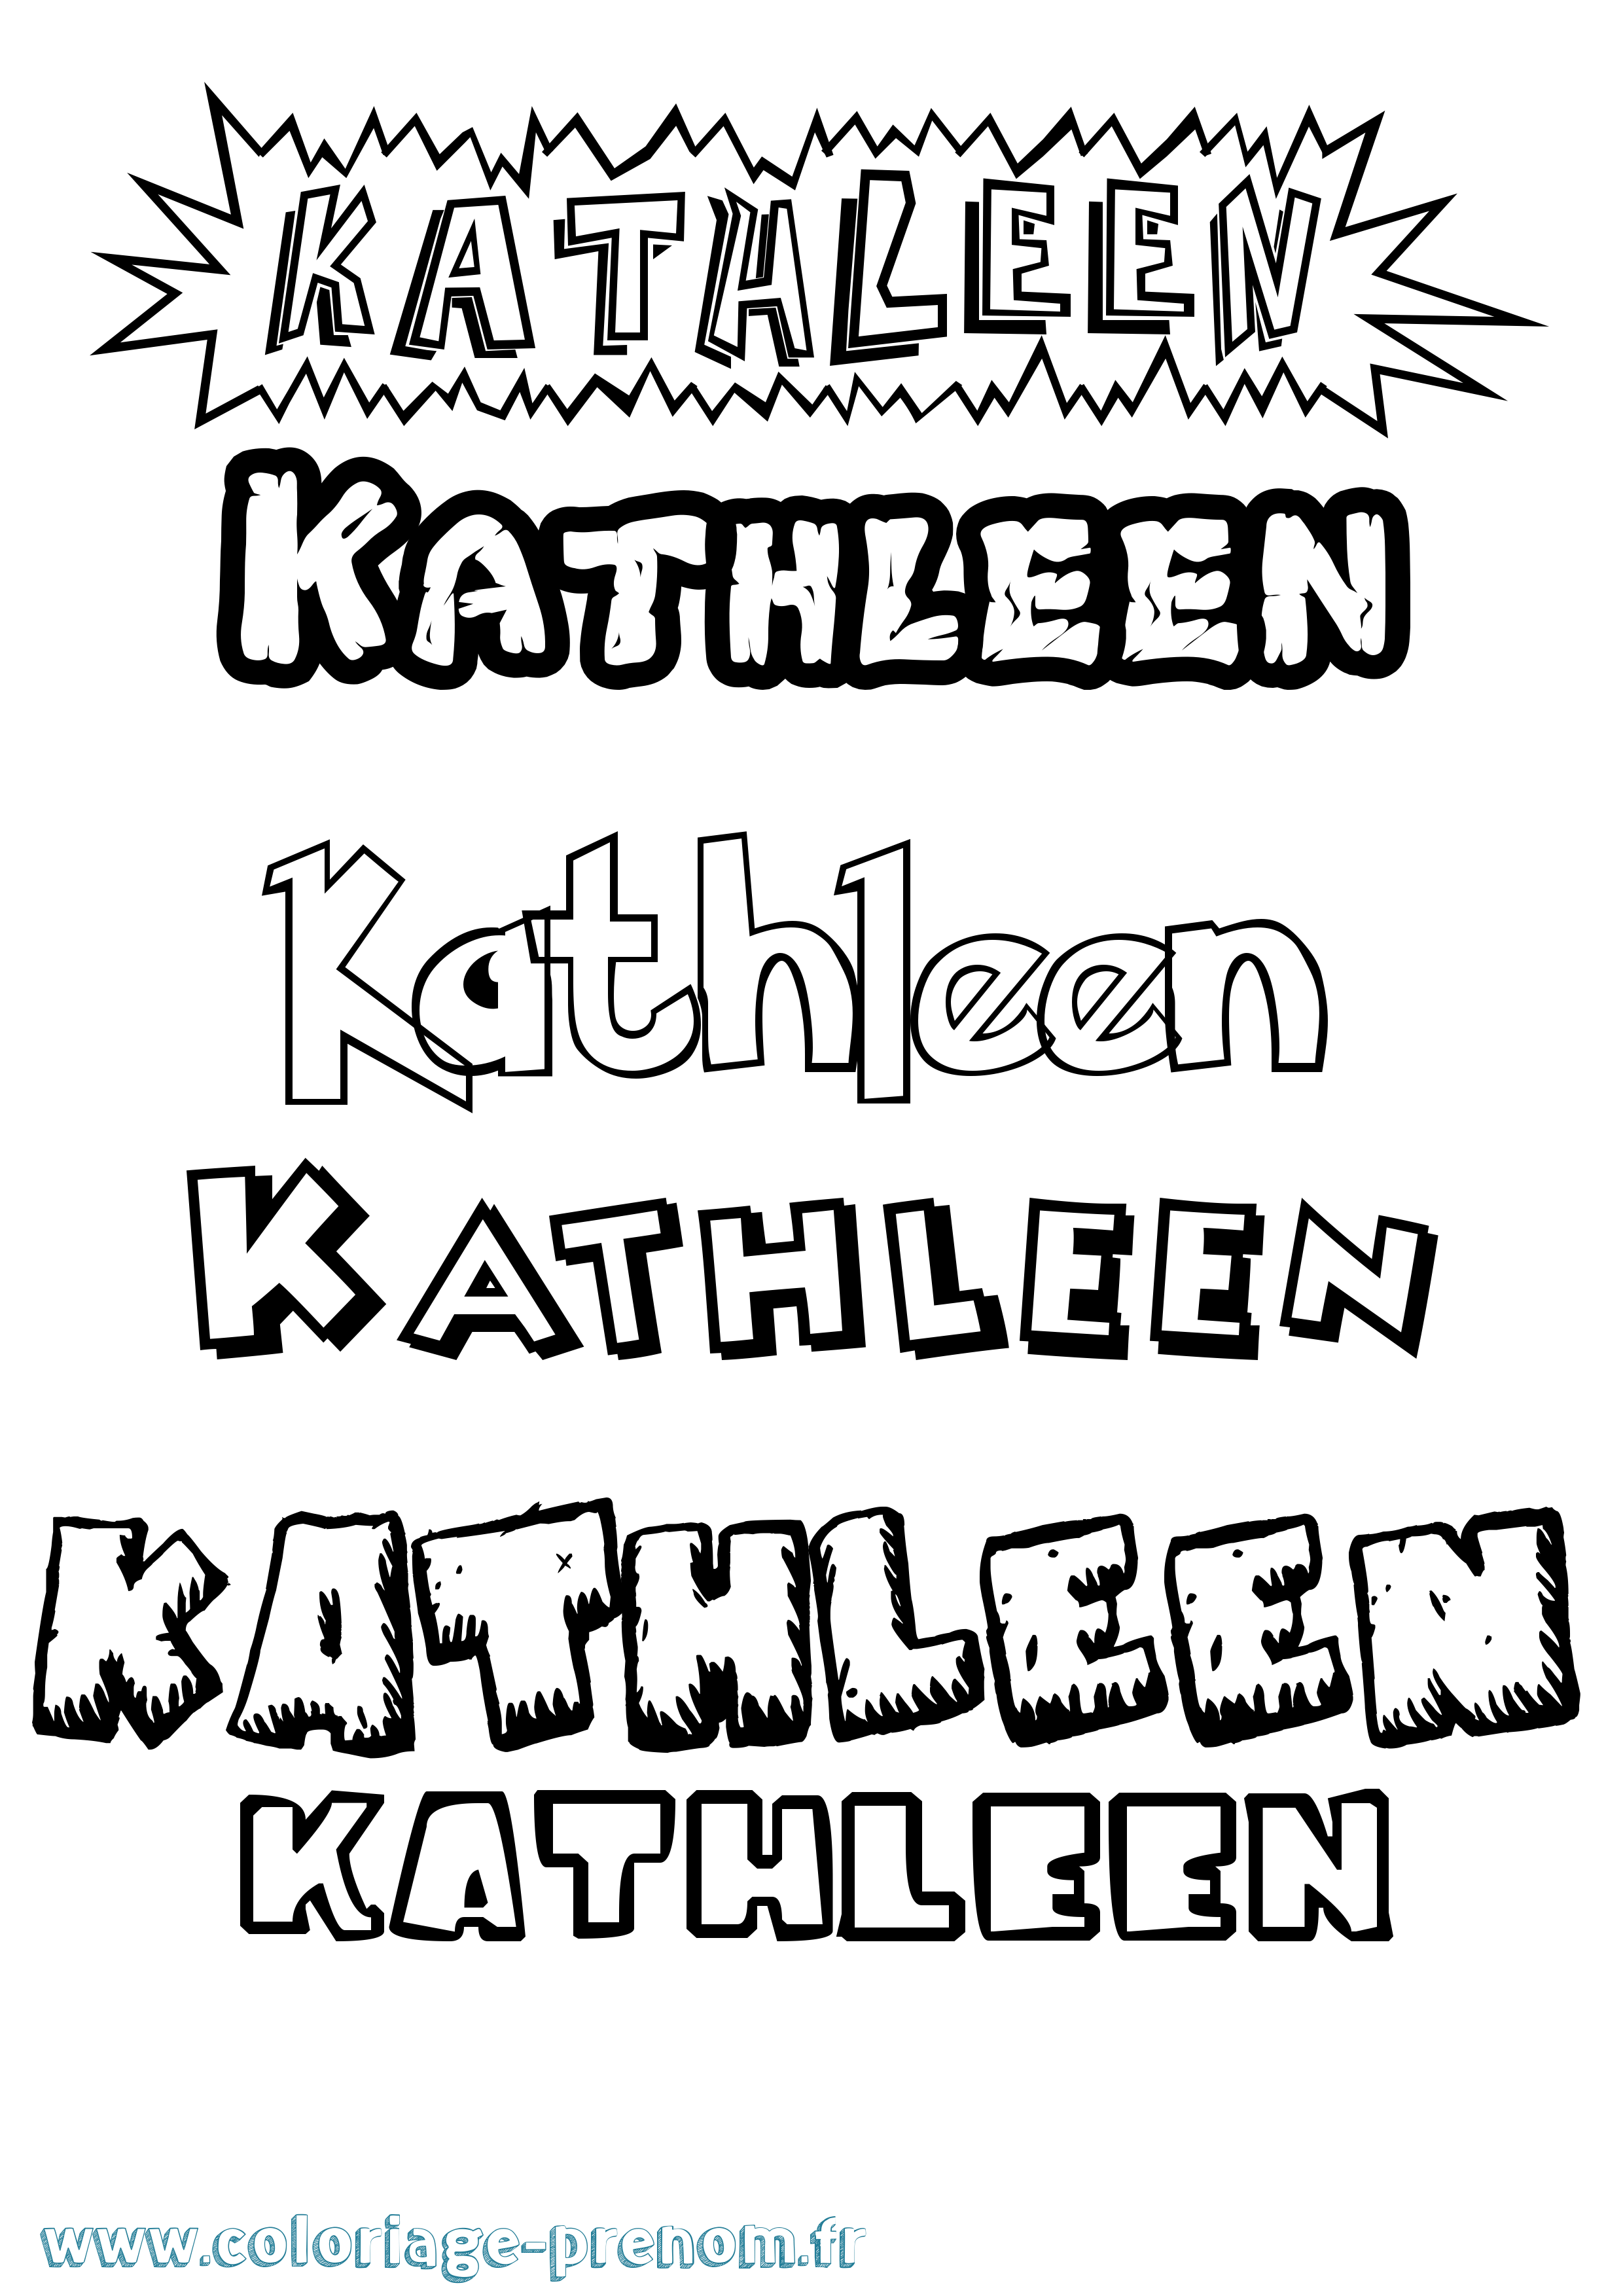 Coloriage prénom Kathleen